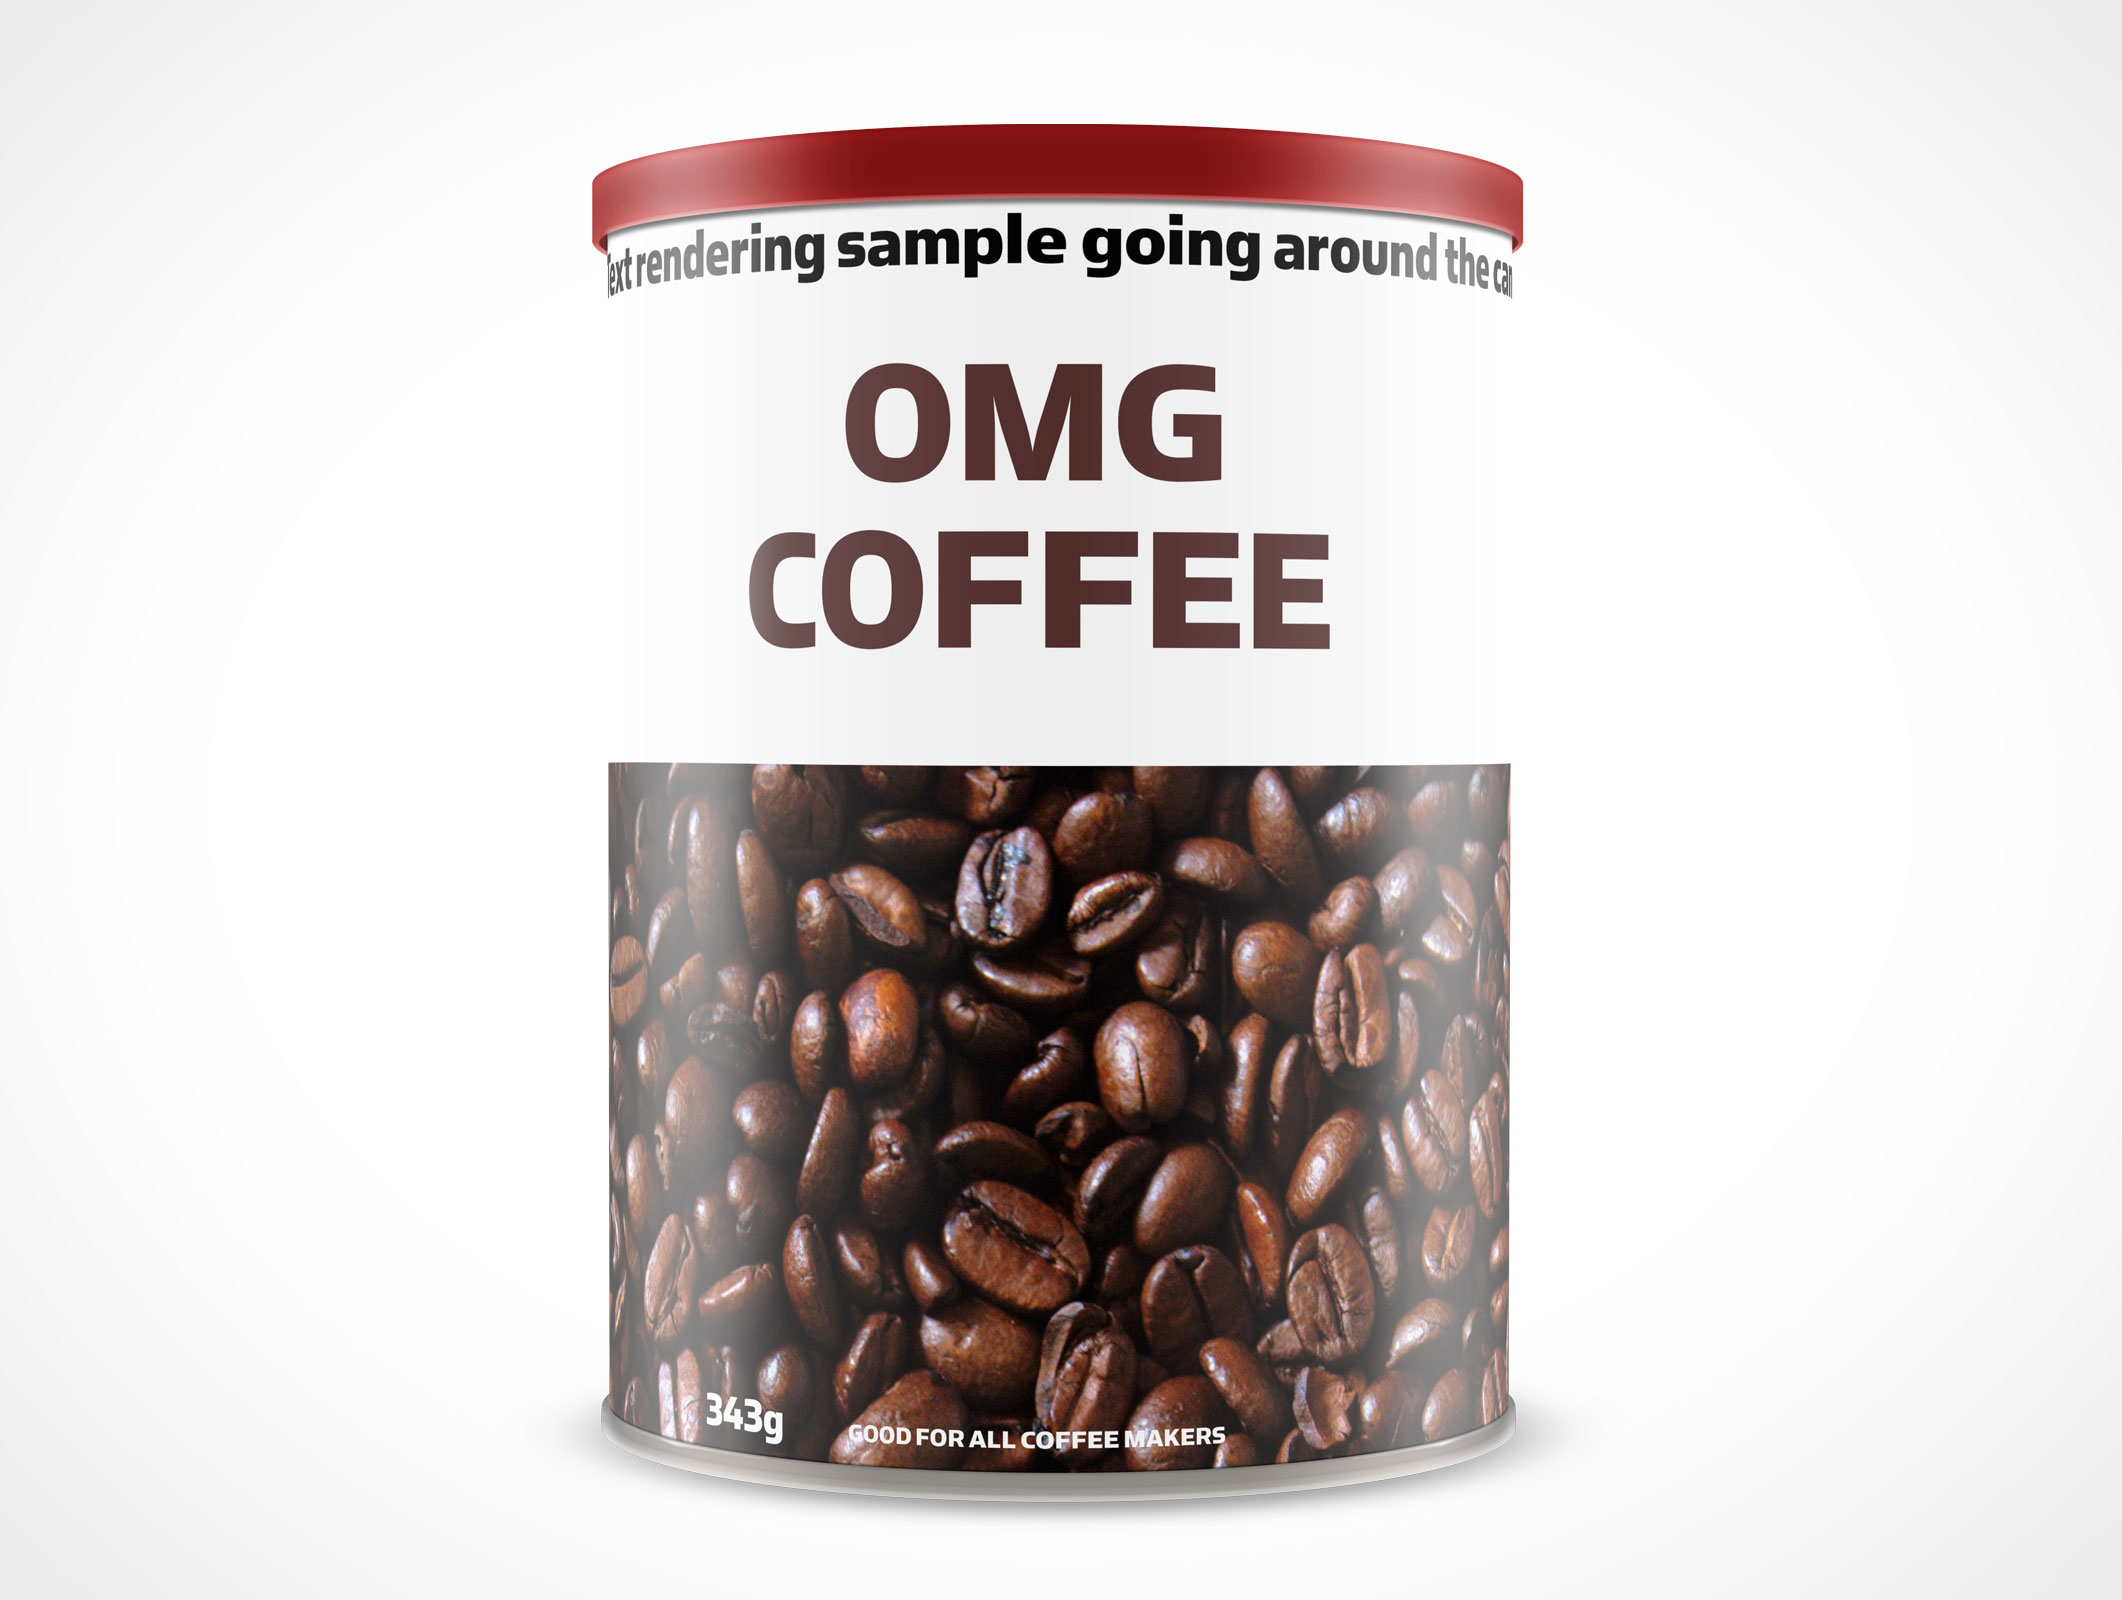 Ground Coffee Can Mockup 20r5